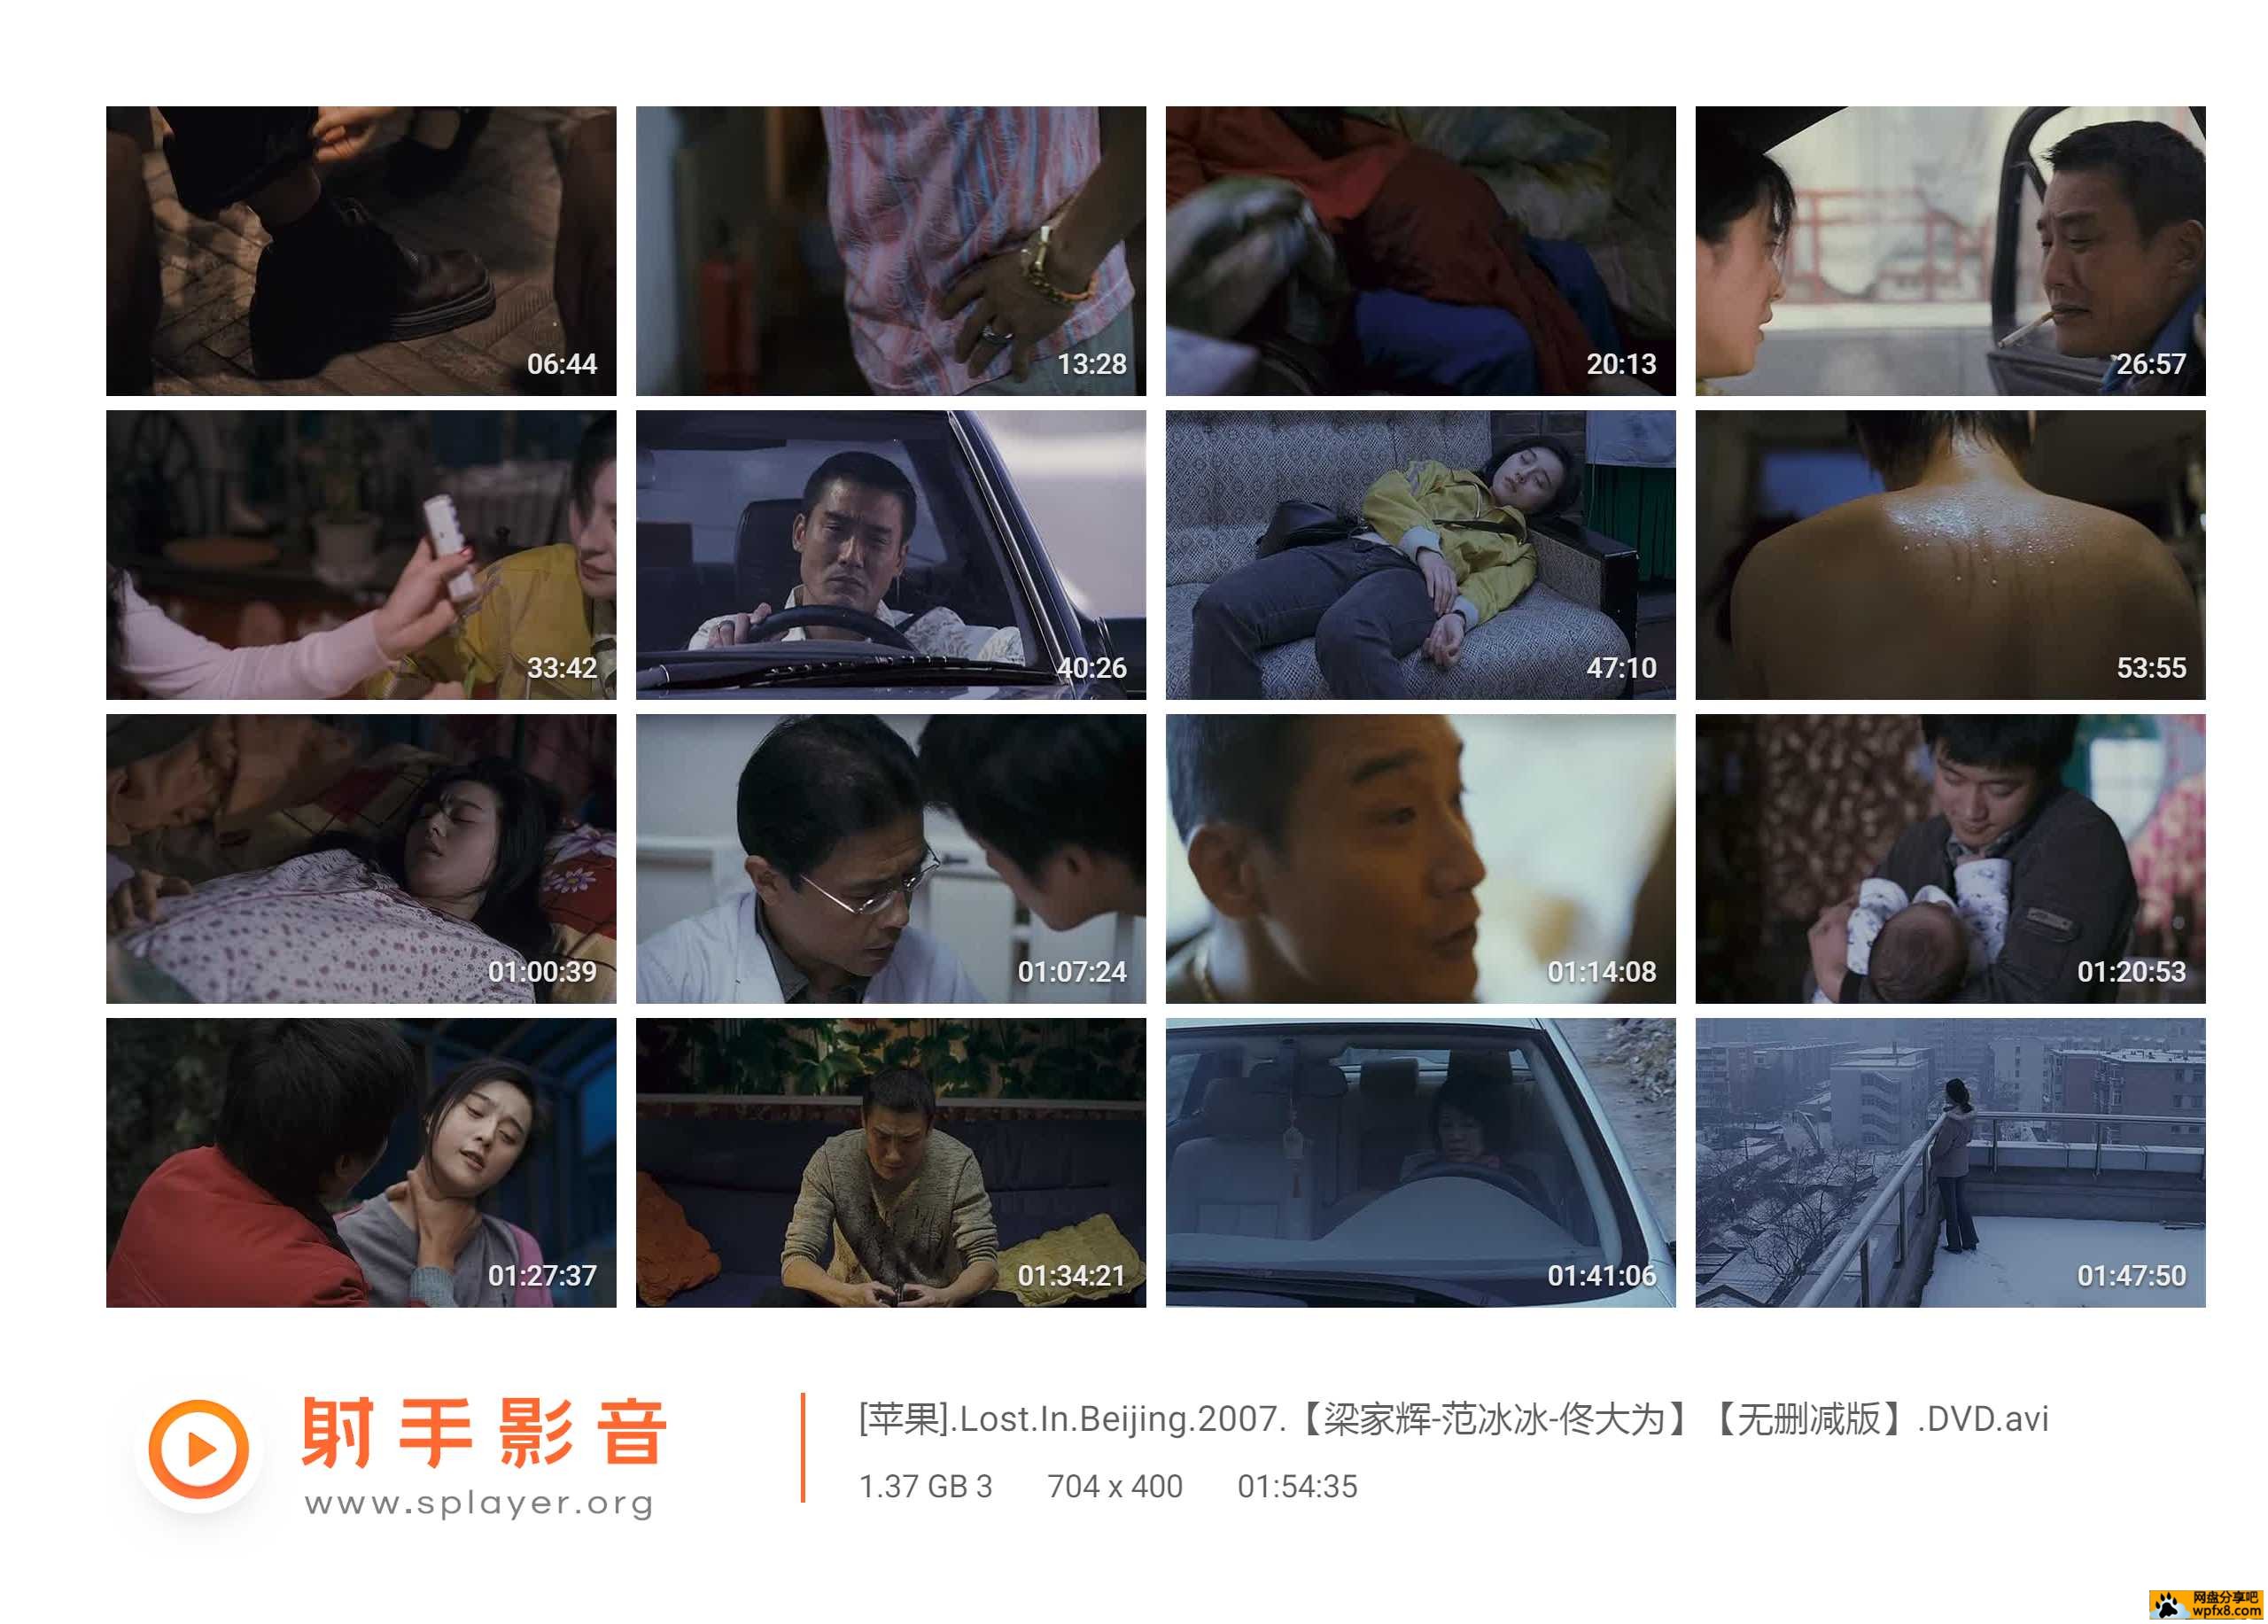 SPlayer-2022717-[苹果].Lost.In.Beijing.2007.【梁家辉-范冰冰-佟大为】.DVD.avi-4x4.jpg